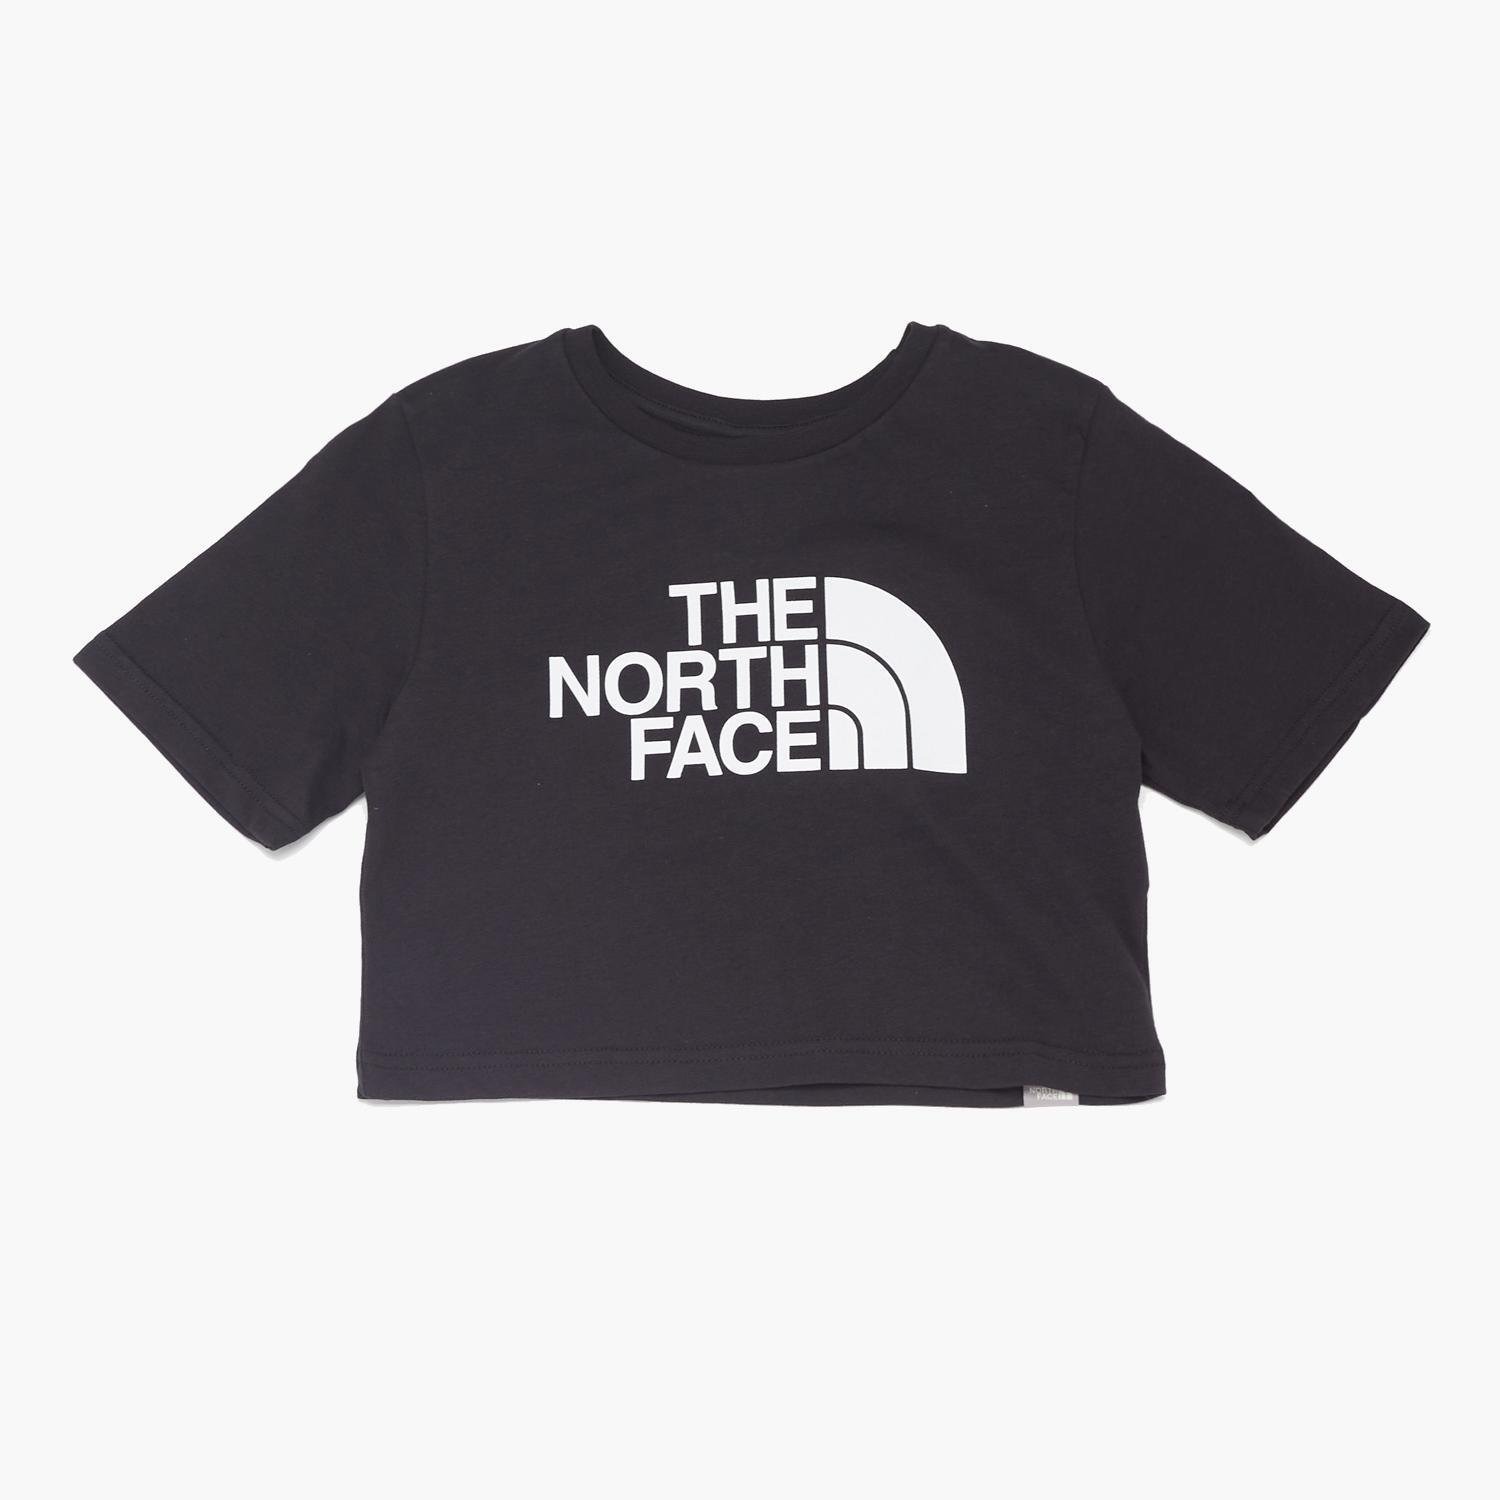 The North Face The north face easy crop shirt zwart kinderen kinderen